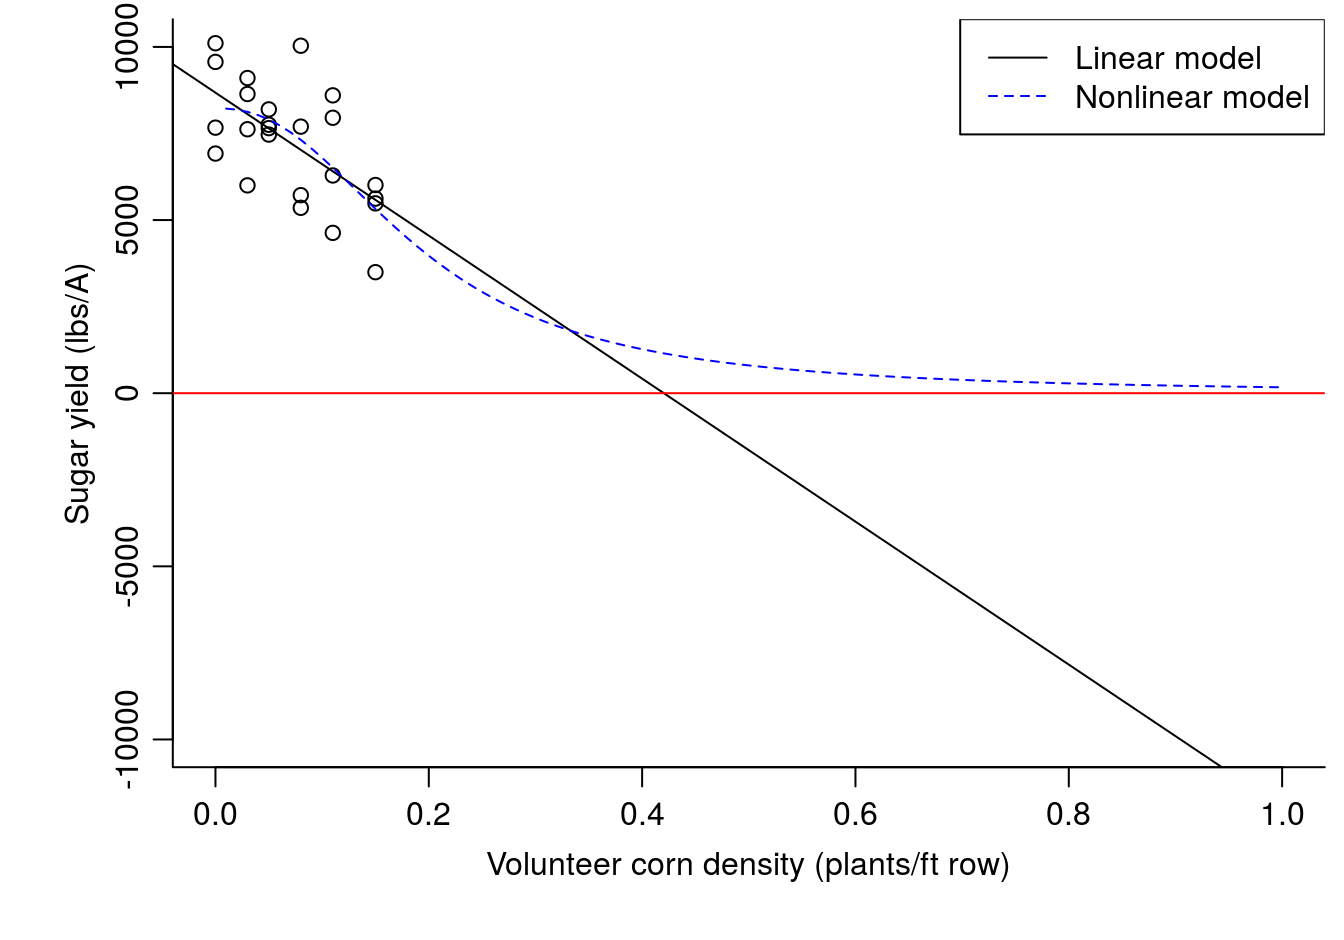 Linear model vs nonlinear model for sugarbeet response to volunteer corn density.